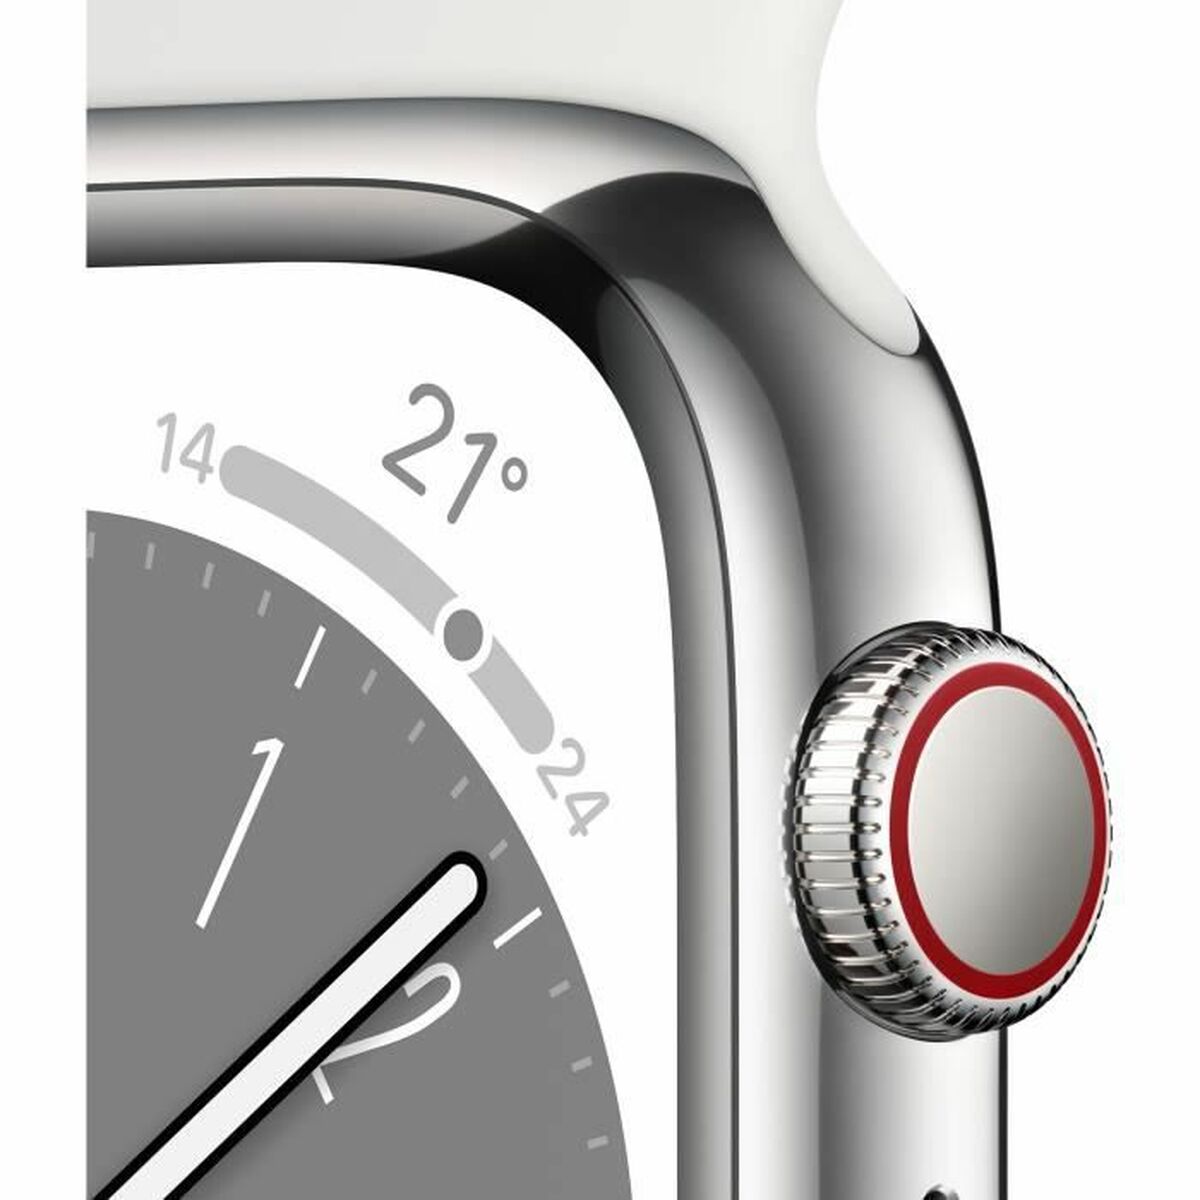 Reloj Inteligente Apple Watch Series 8 32gb 4g  MKP